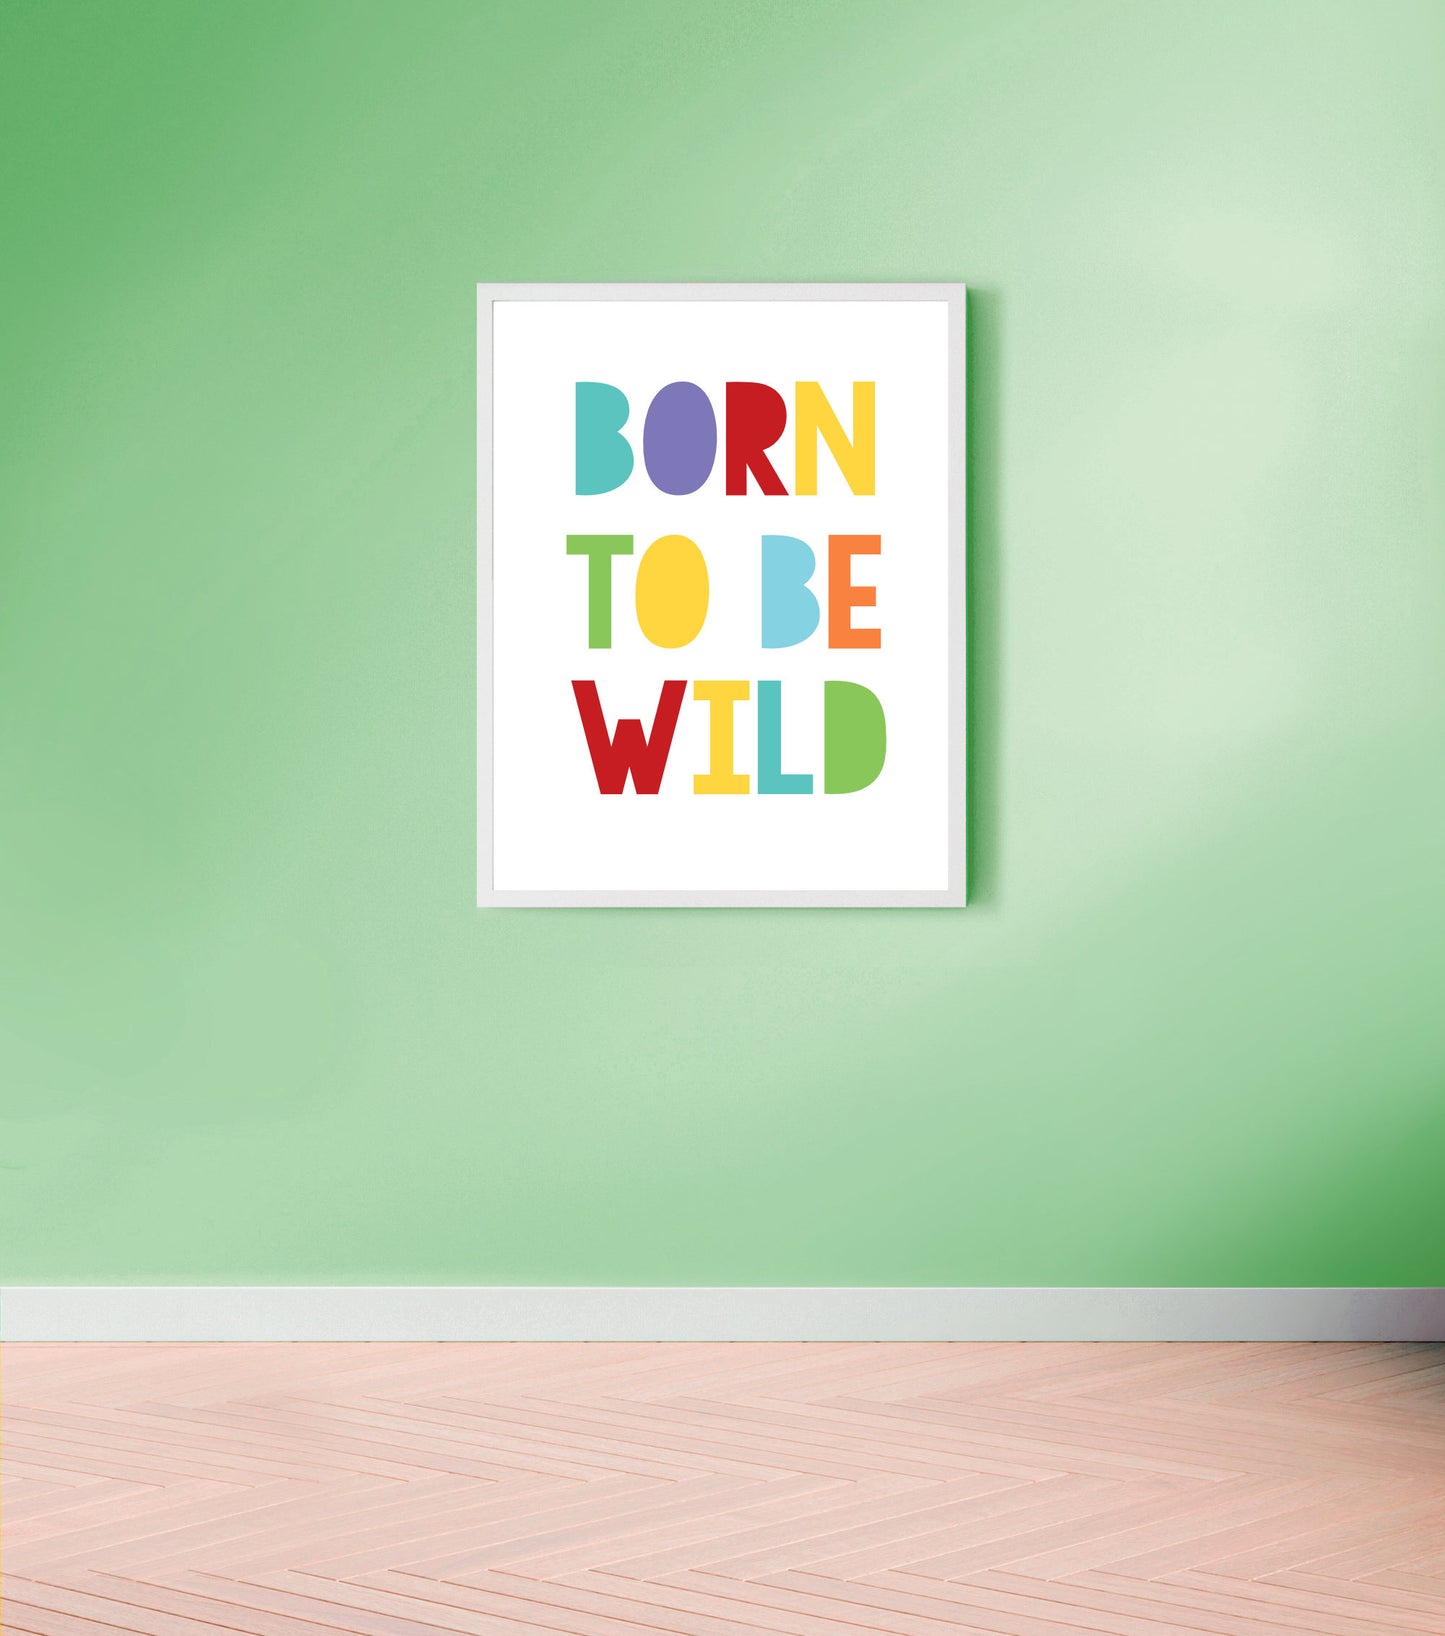 Born to be wild print